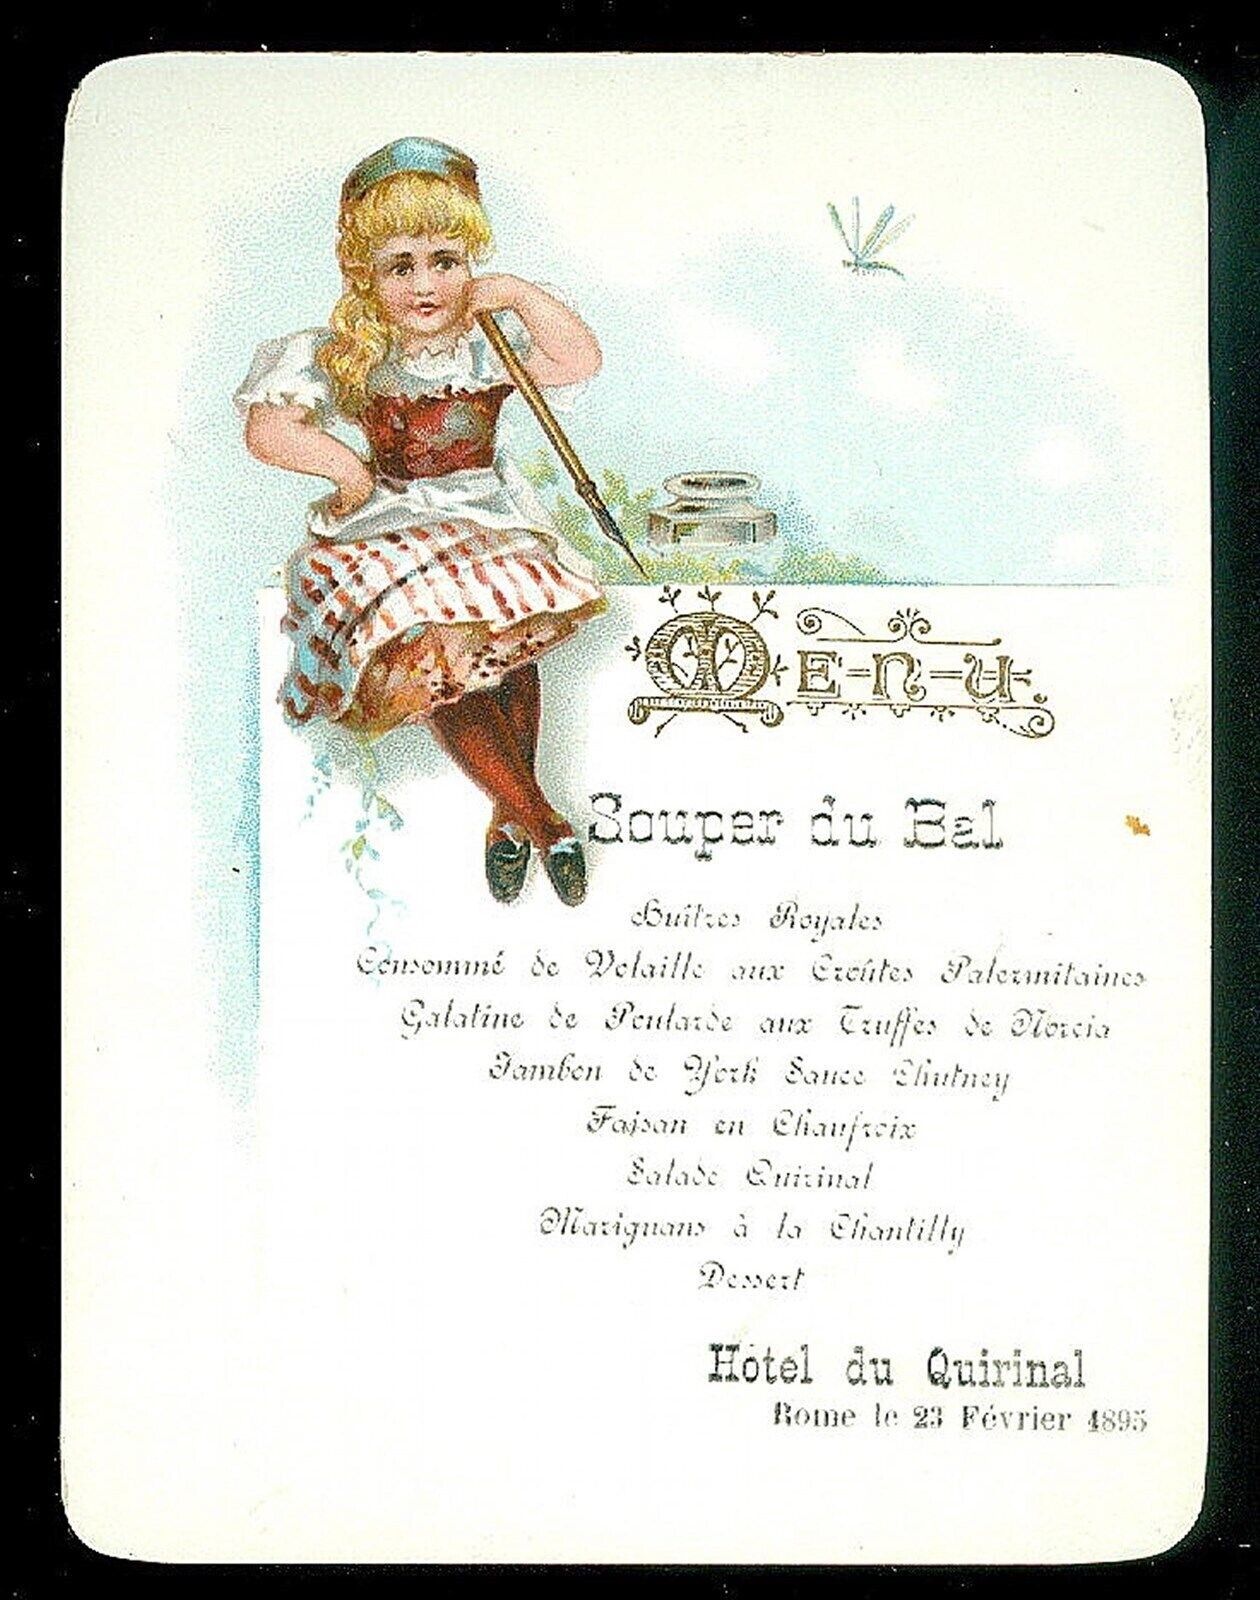 Fine Chromolithograph Embossed Dinner Dance Menu, Hotel du Quirinal, Rome 1895